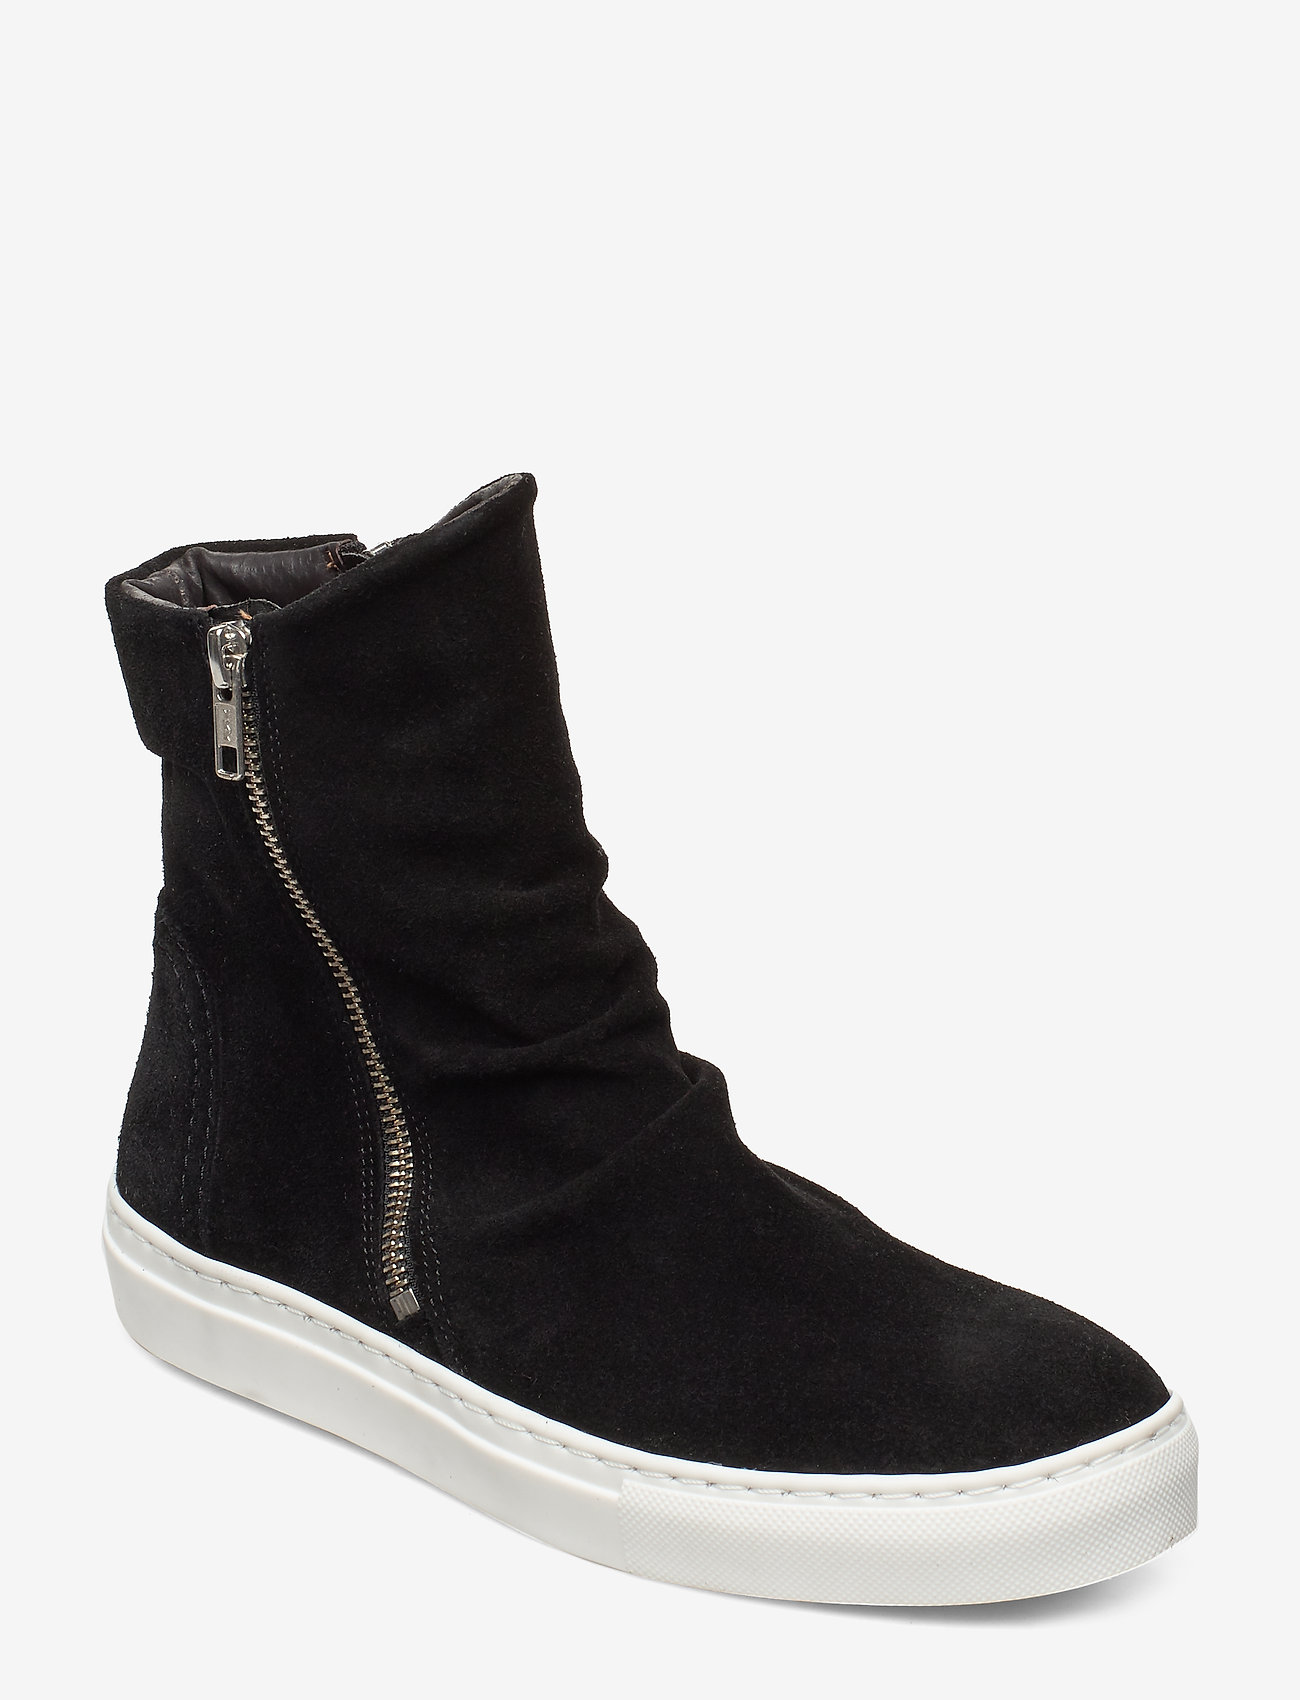 black boots white sole